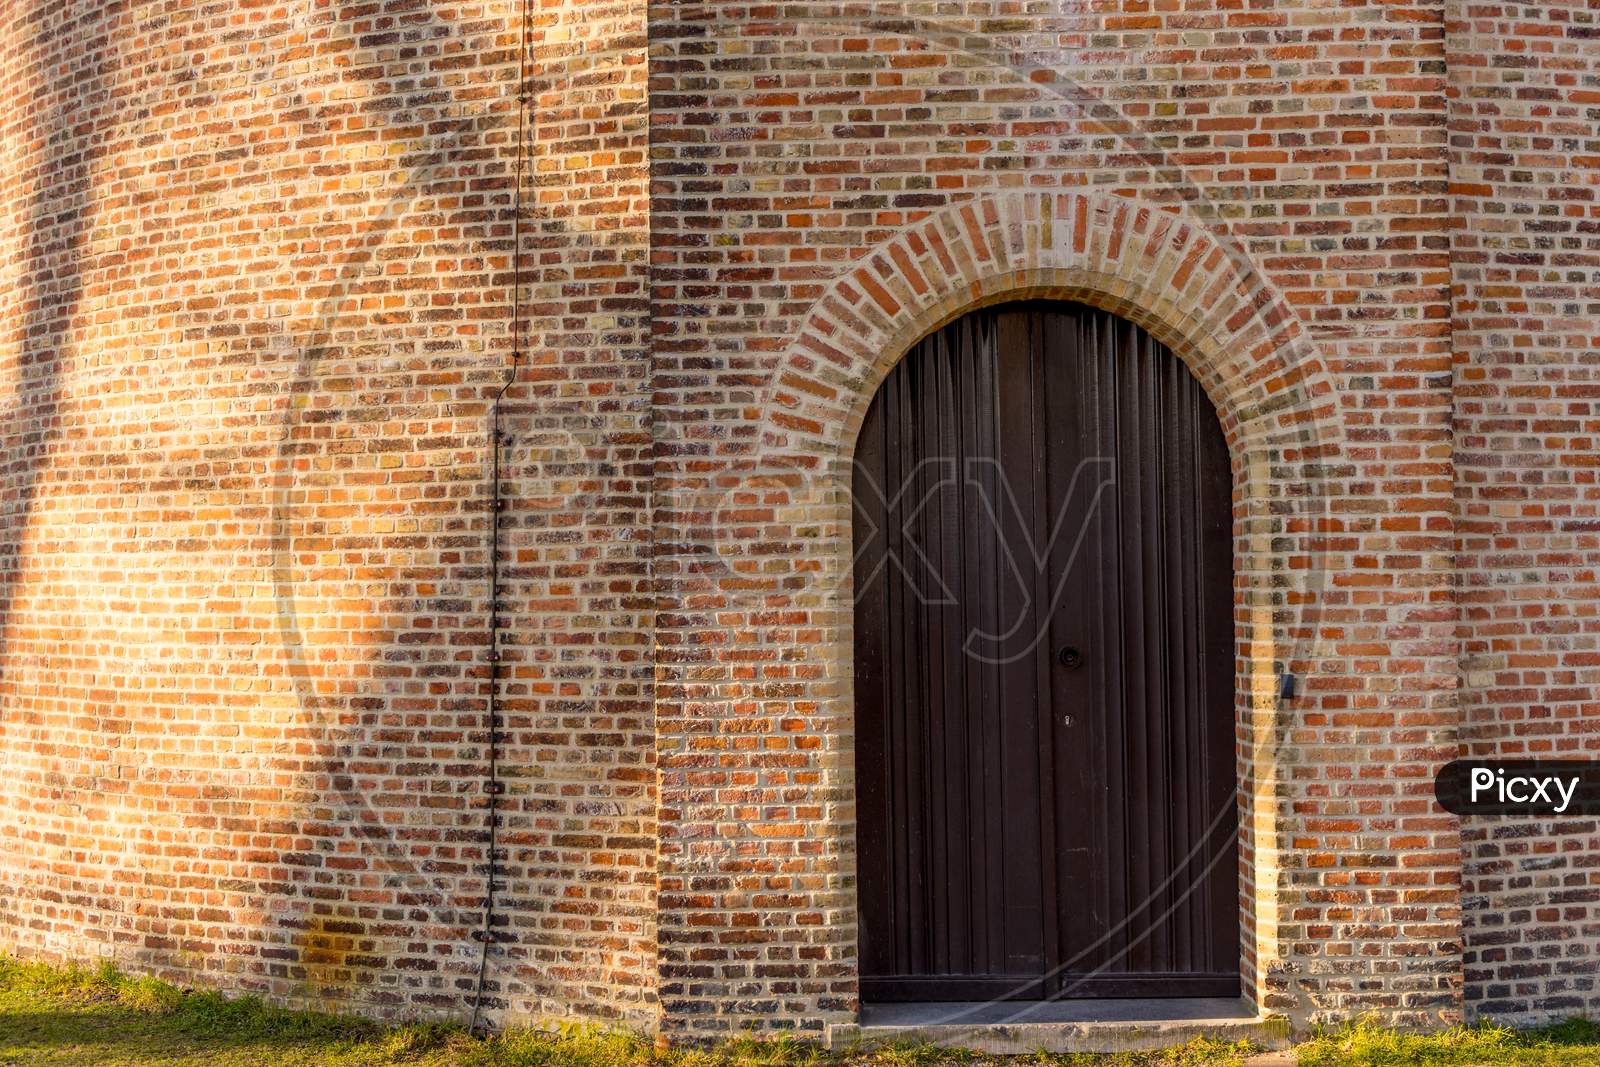 Belgium, Bruges, Entrance Under Arch Of An Old Brick Building